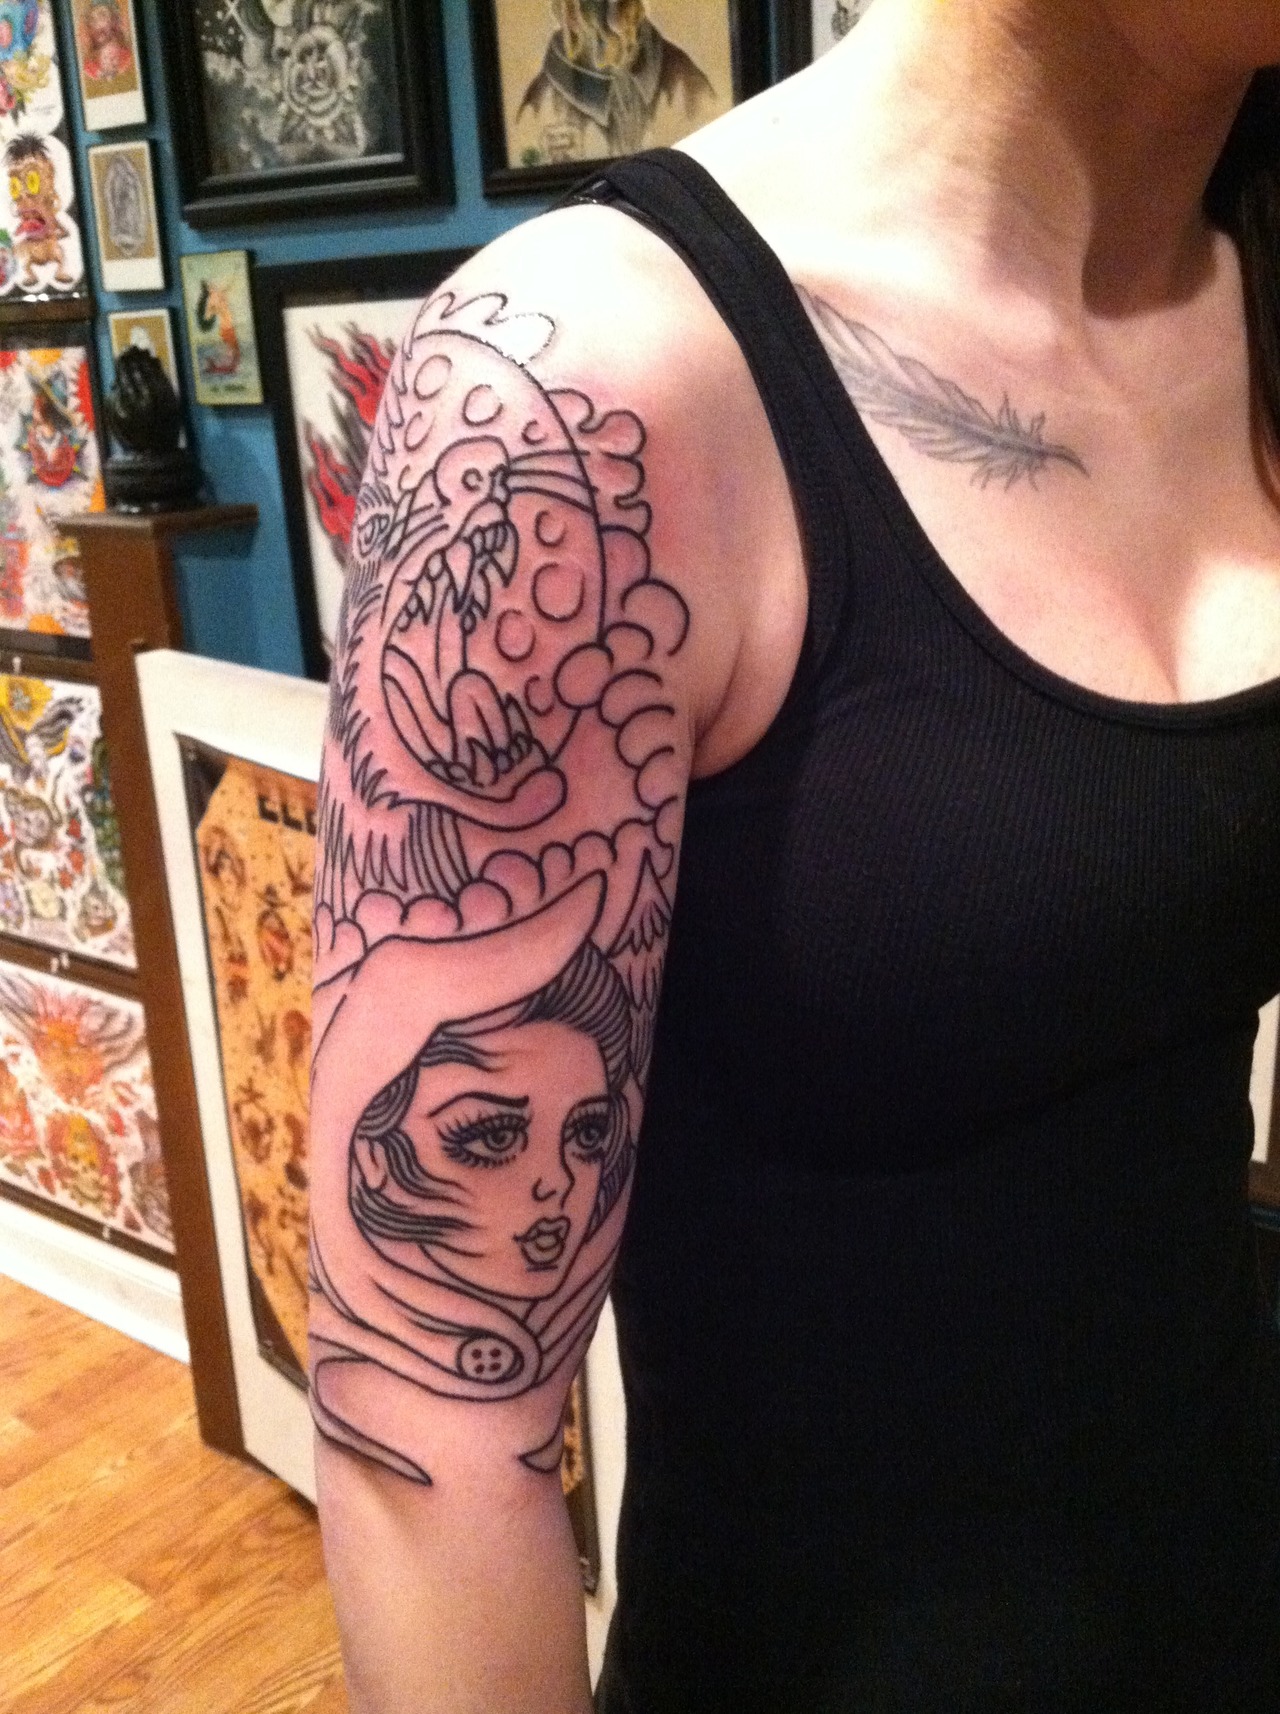 Girl’s sleeve tattoo